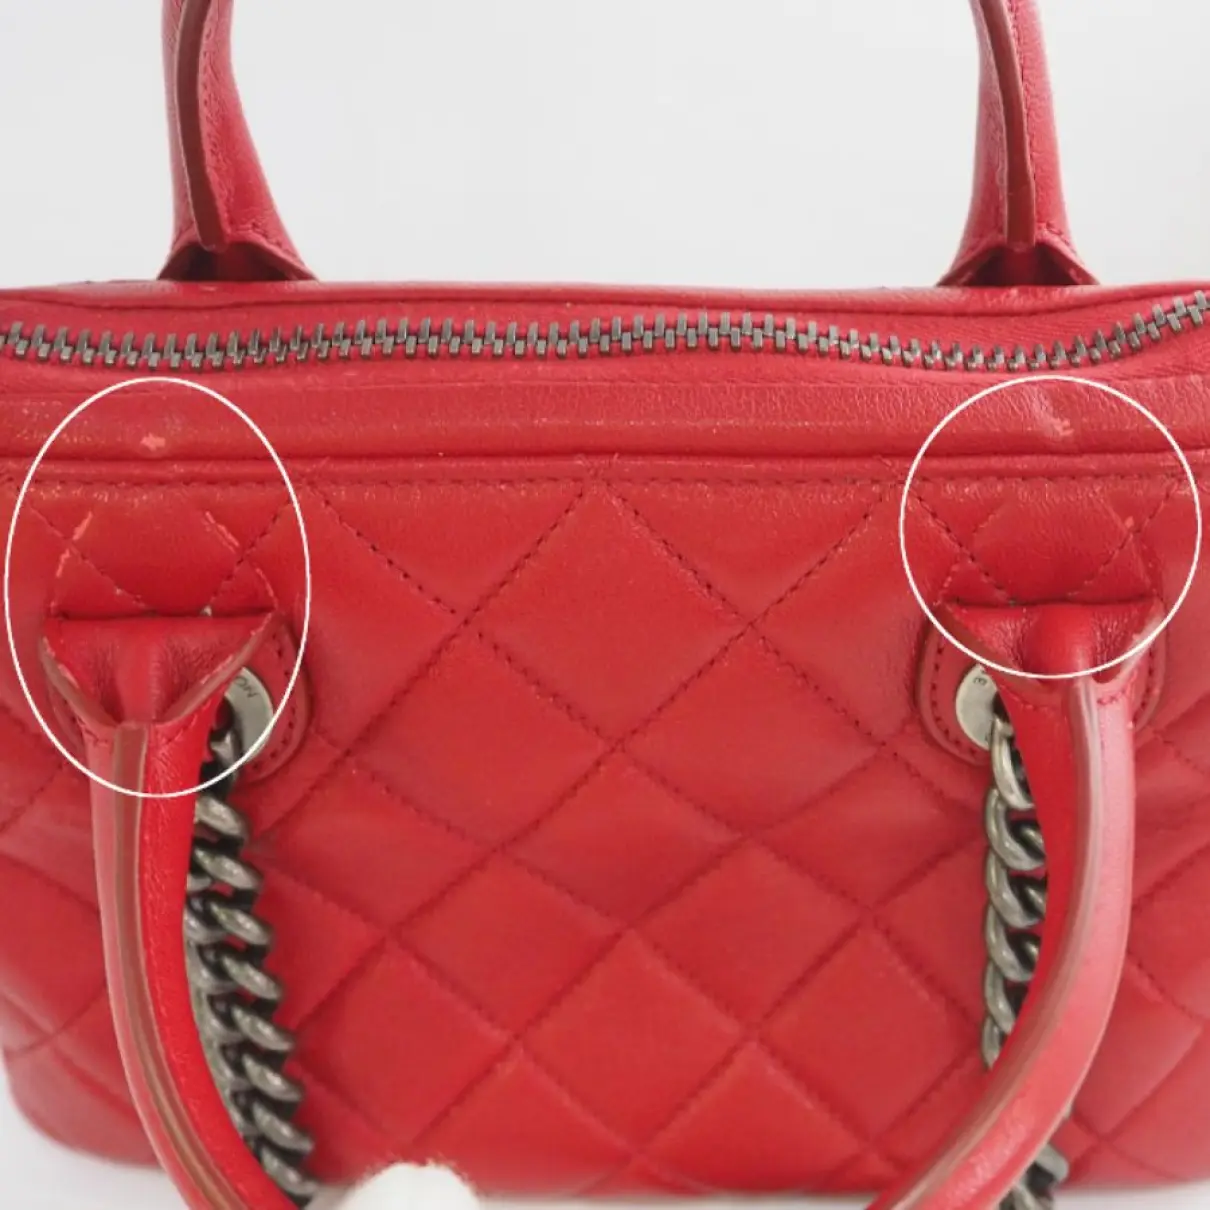 Buy Chanel Coco Luxe leather handbag online